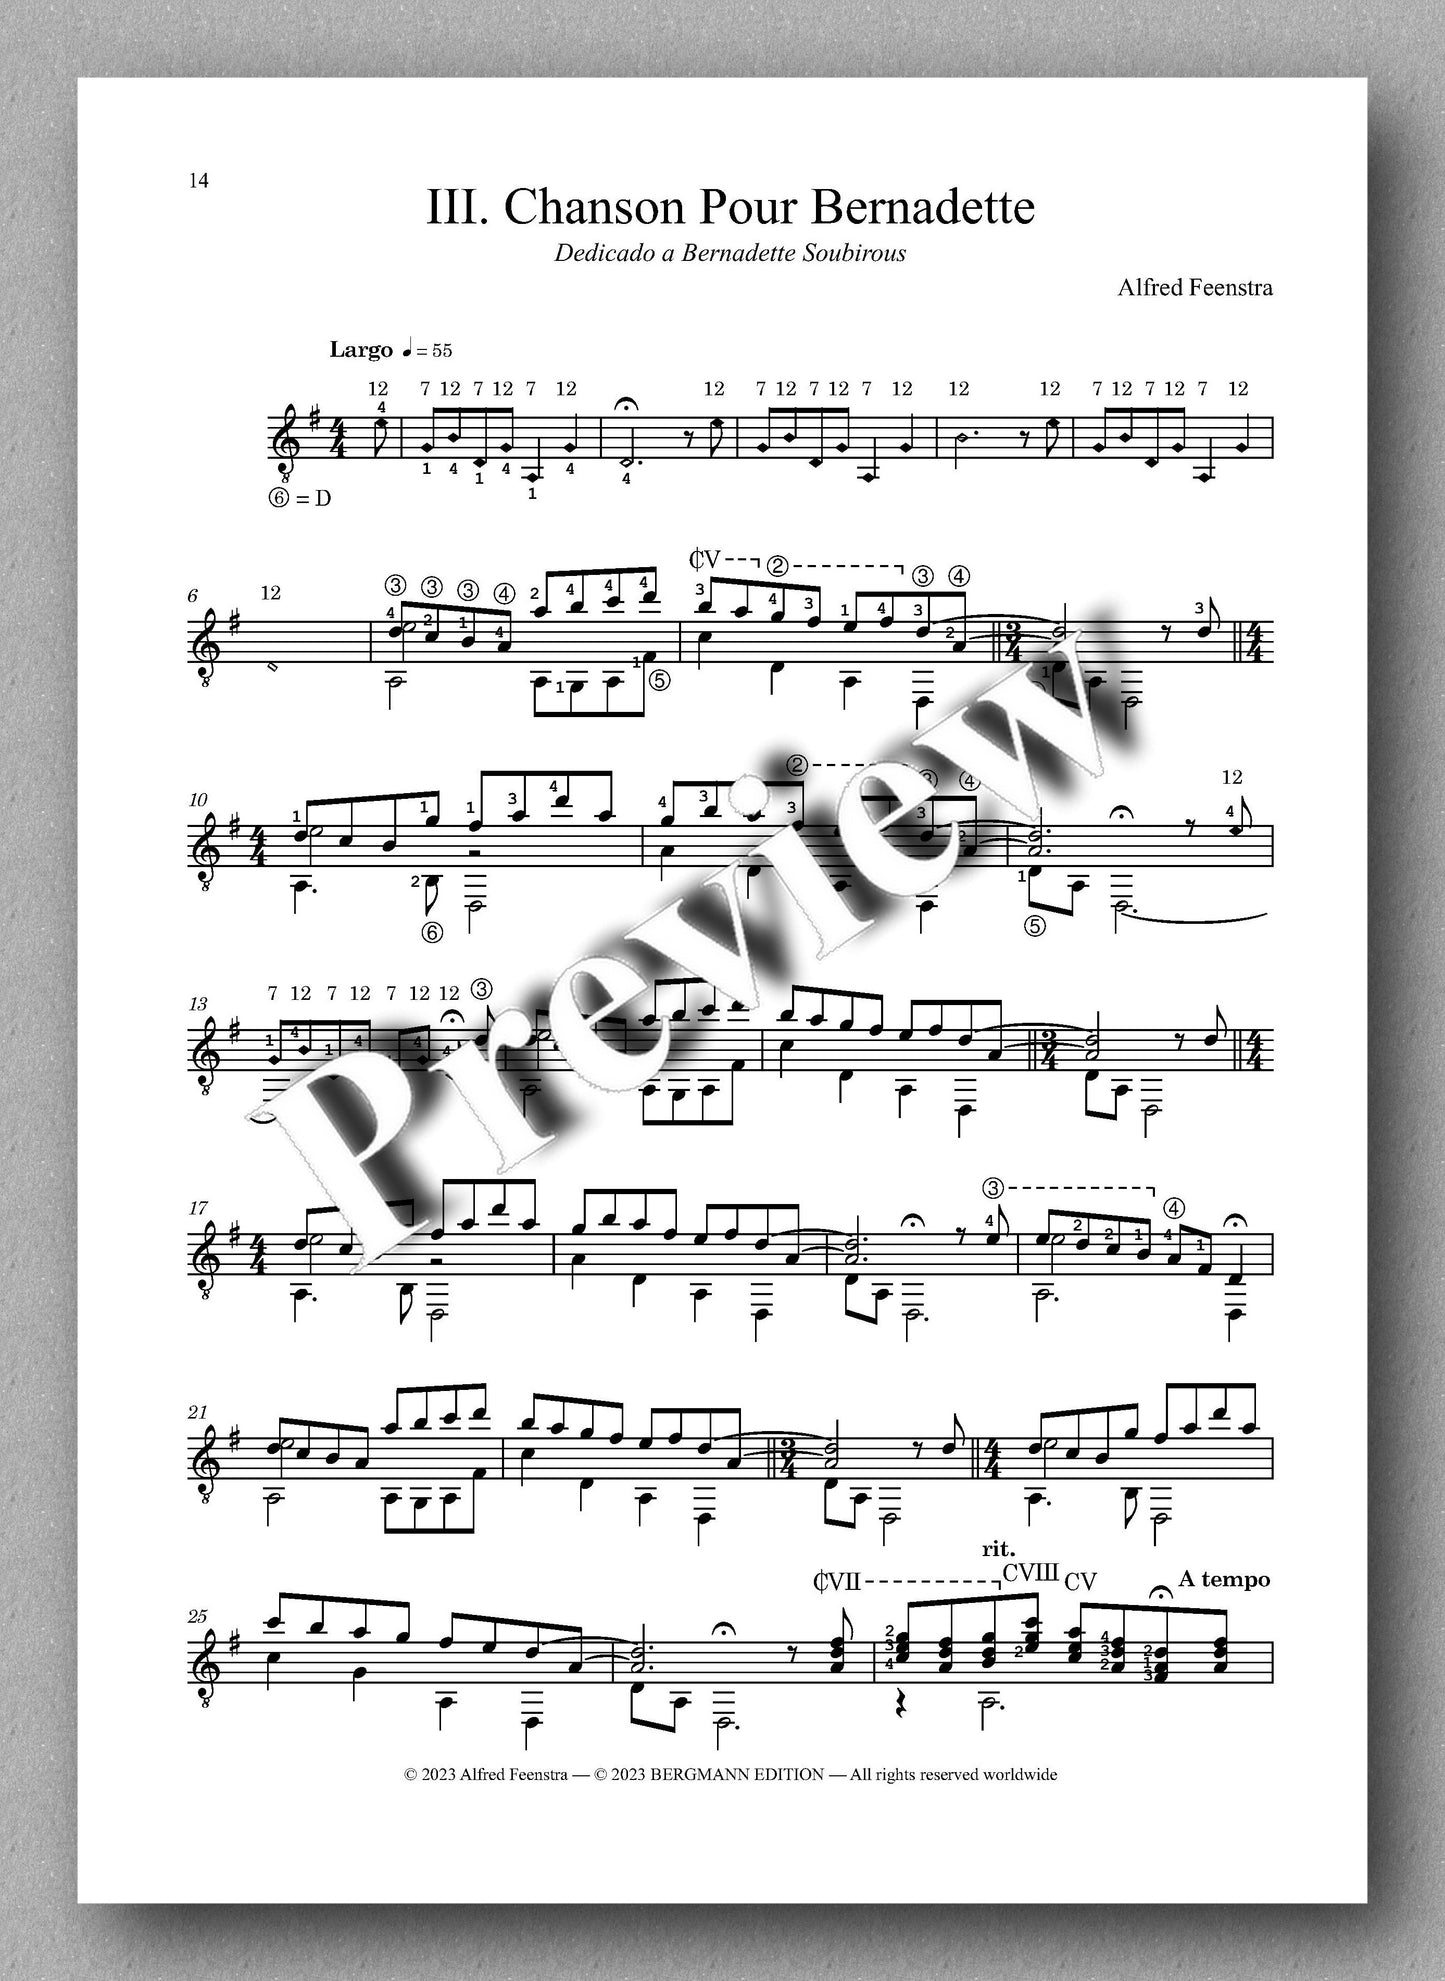 Alfred Feenstra, Suite de Santa María - preview of the music score 2